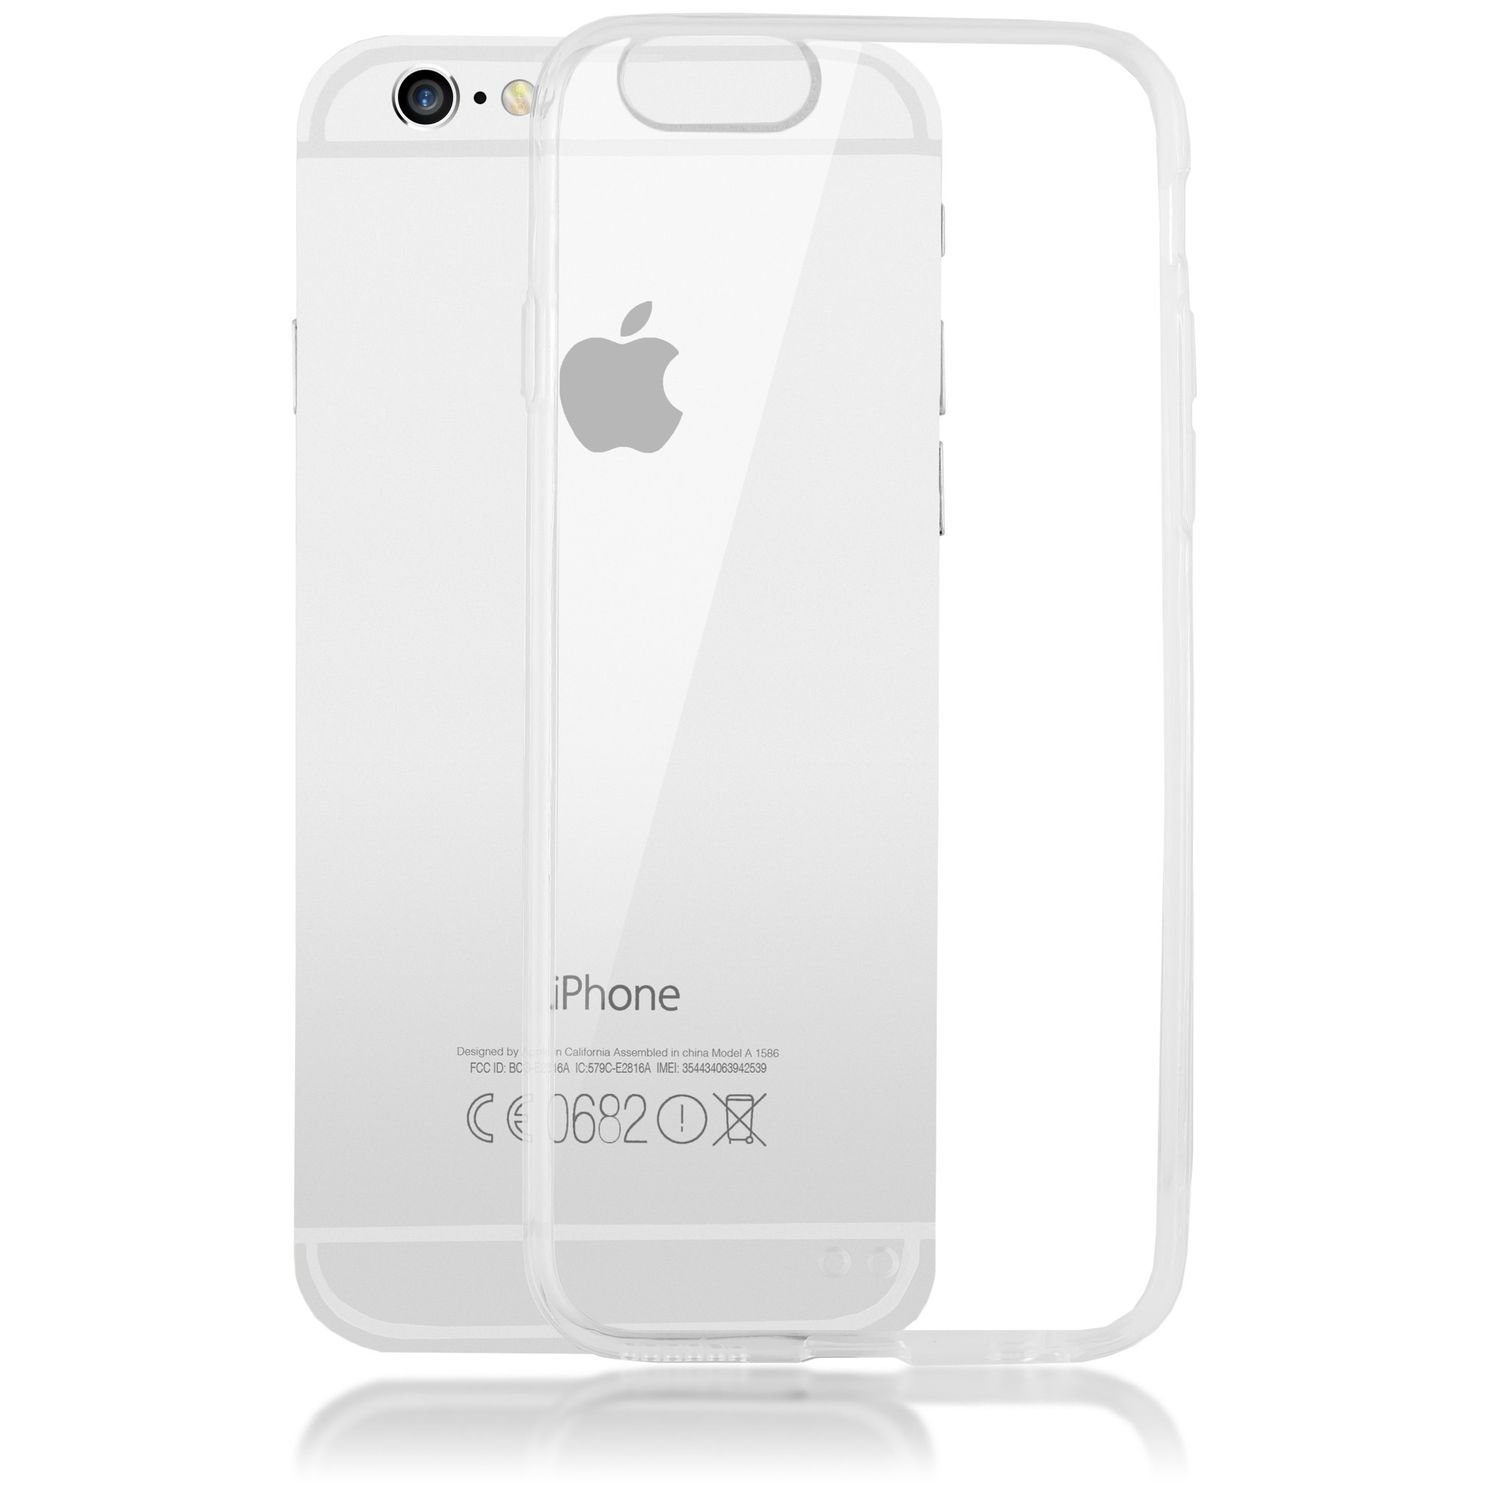 Nalia Smartphone-Hülle Apple iPhone 6 Apple iPhone 6s, Klar Transparent  Hülle / Harte Rückseite / Soft Silikon Rahmen / Durchsichtige Schutzhülle /  Kratzfest / Vergilbungsfrei / Stoßfest / Anti-Gelb / Phone Cover